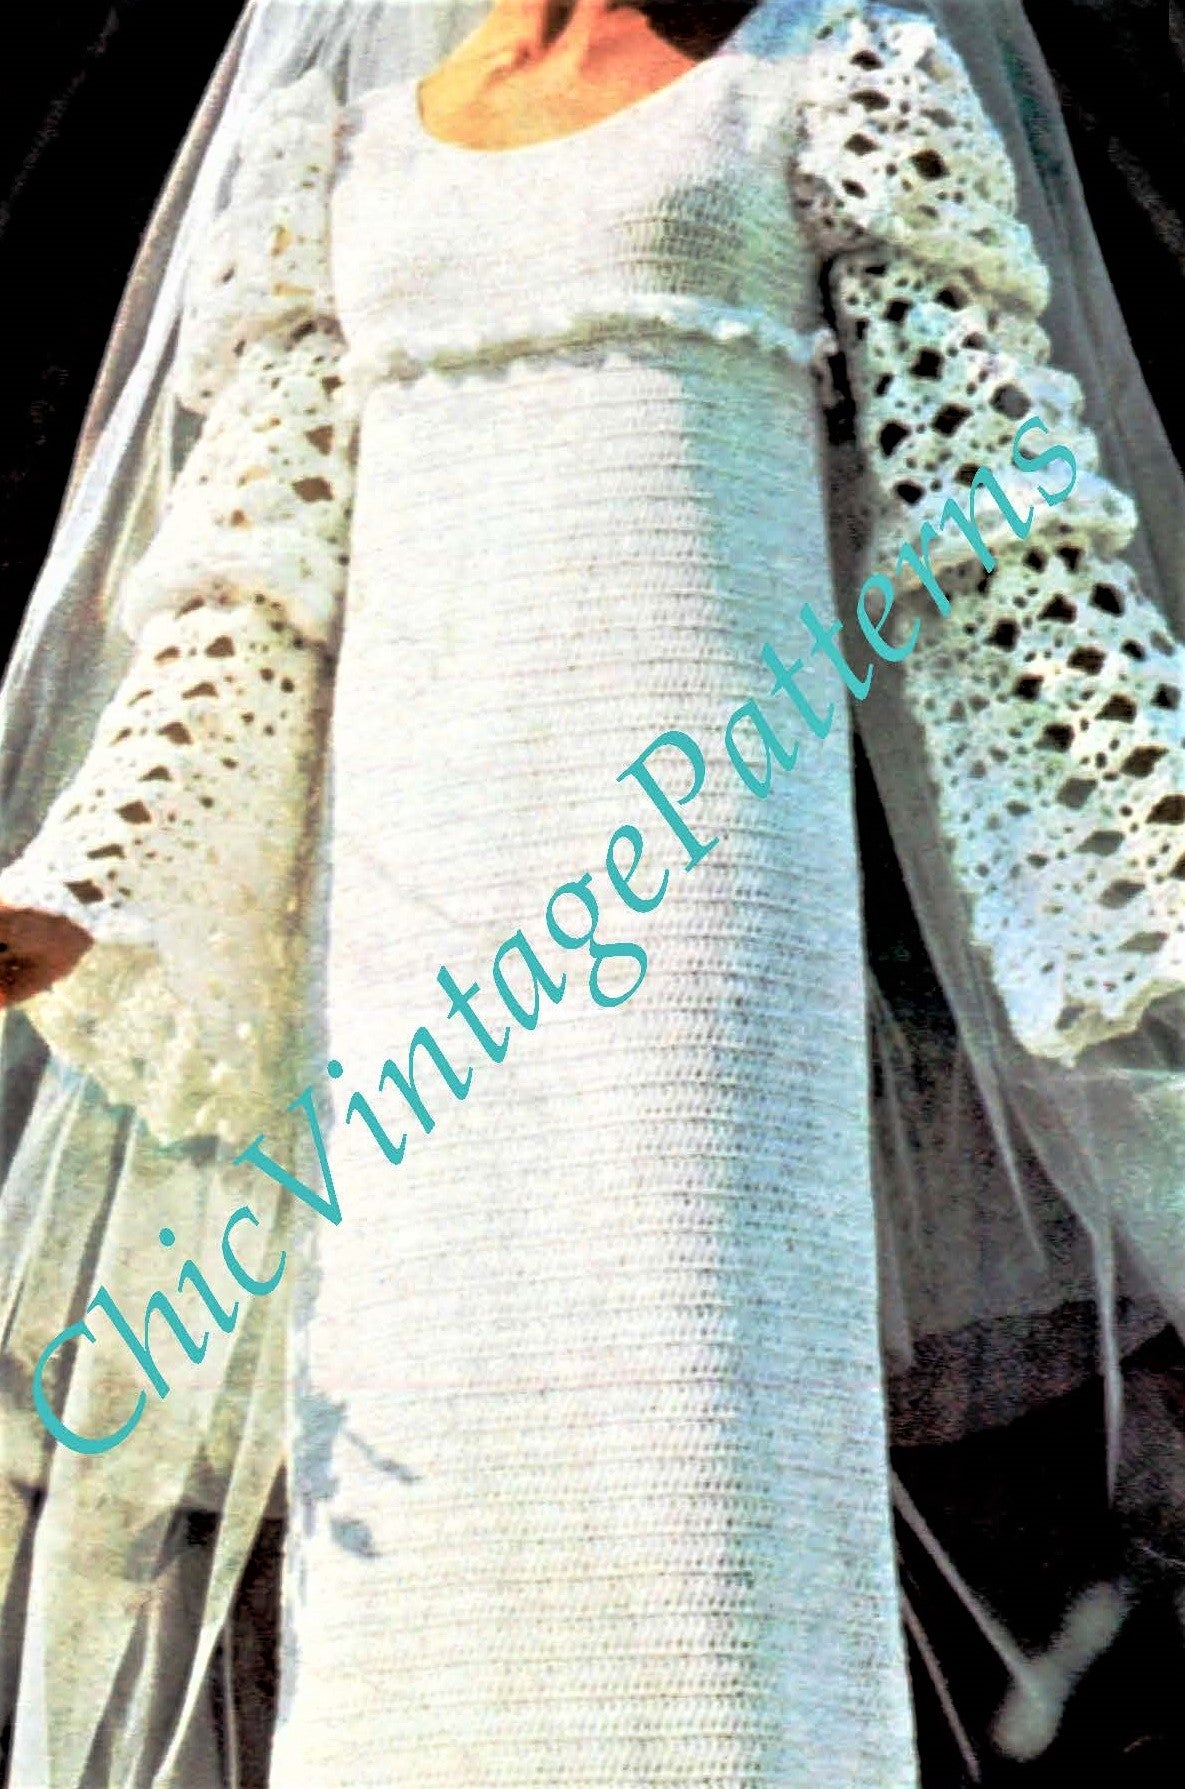 Crochet bride dress for dolls  VERY EASY (portuguese) 